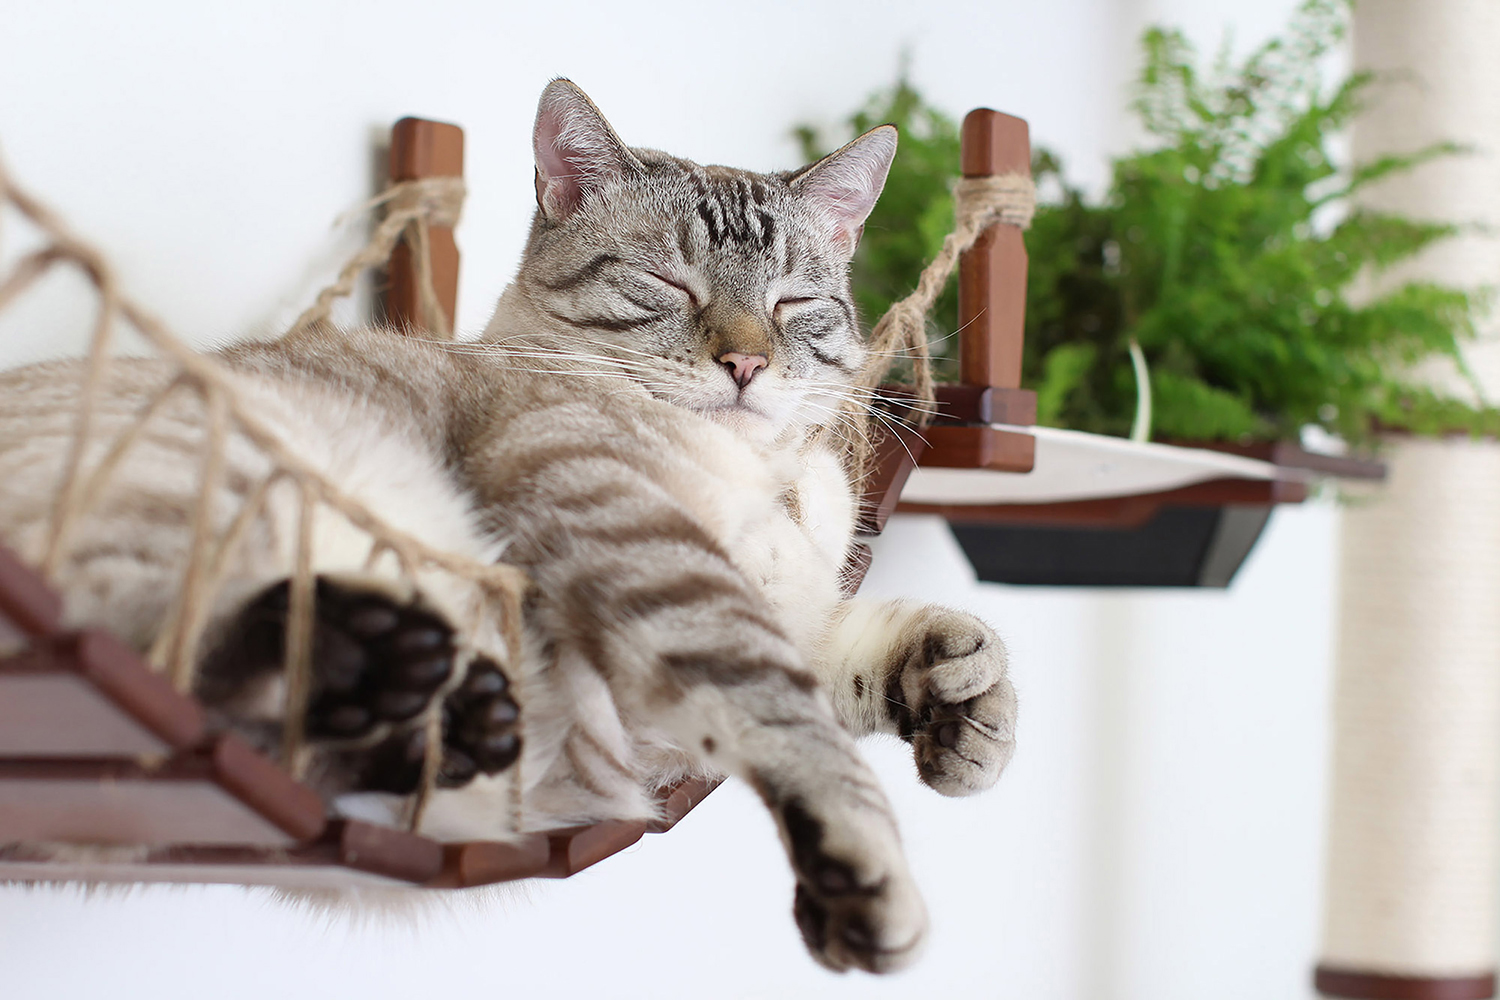 Cat sleeping on wall-mounted cat bridge